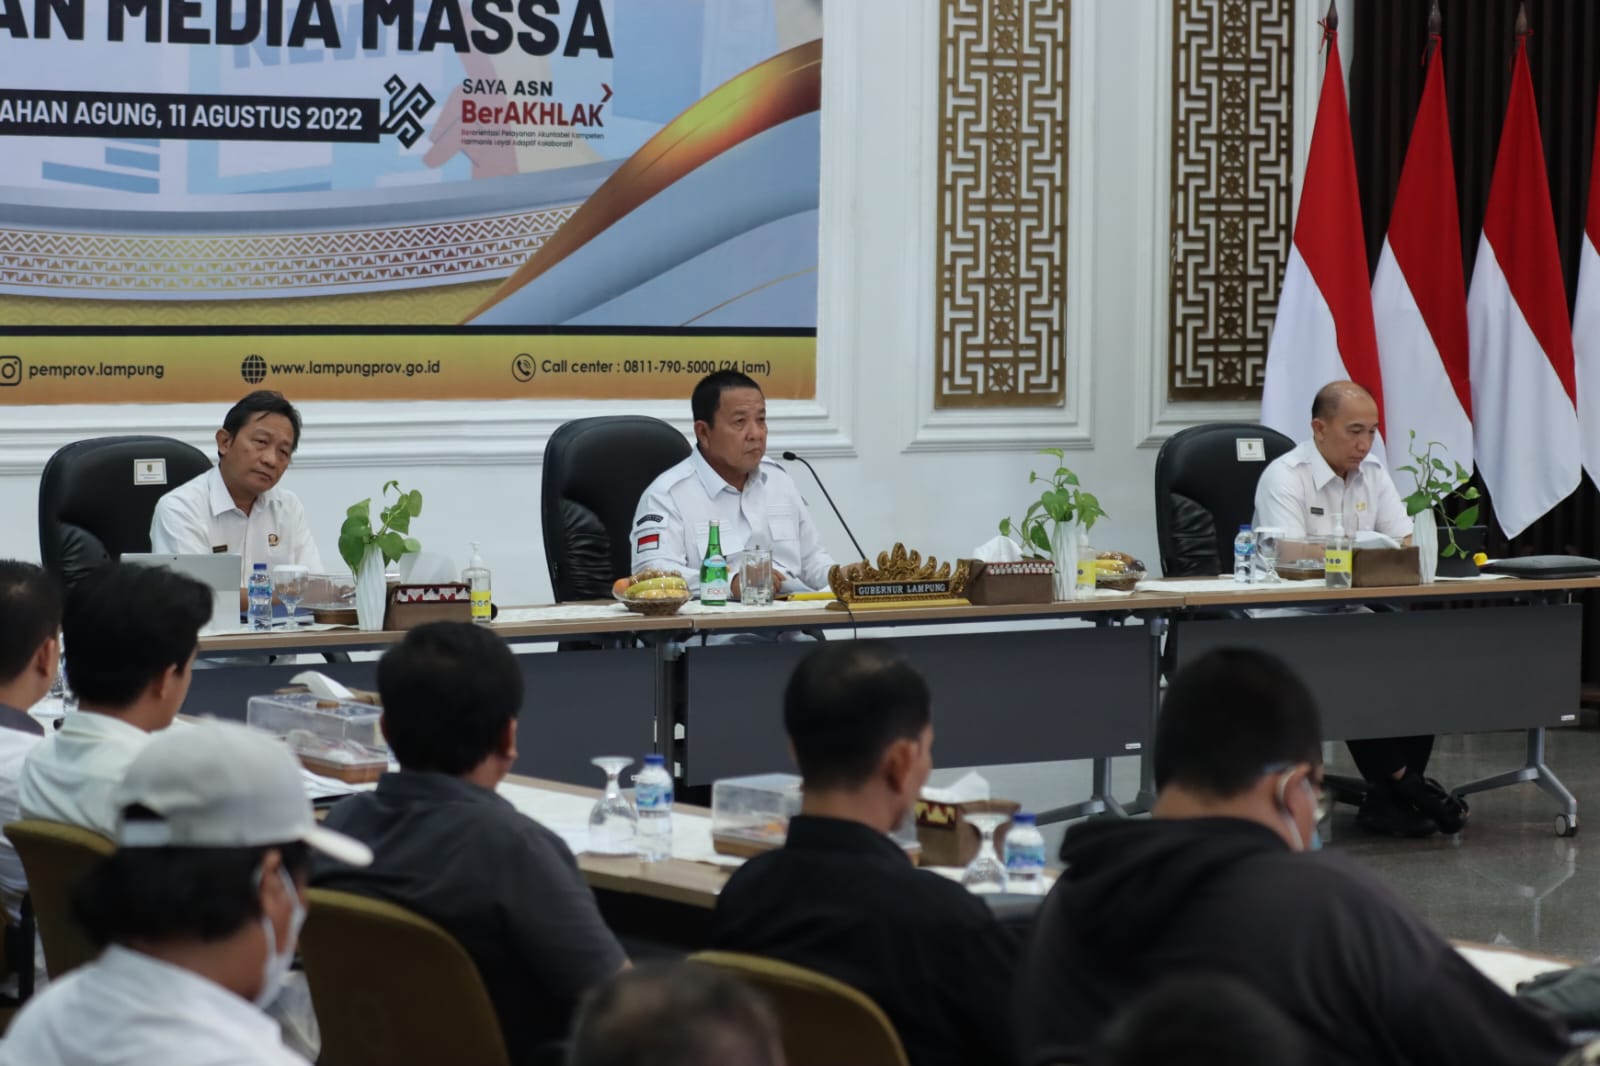 Silaturahmi Dengan Pimpinan Media Massa, Media Cetak, dan Elektronik, Gubernur Arinal Sampaikan Kebijakan Prog